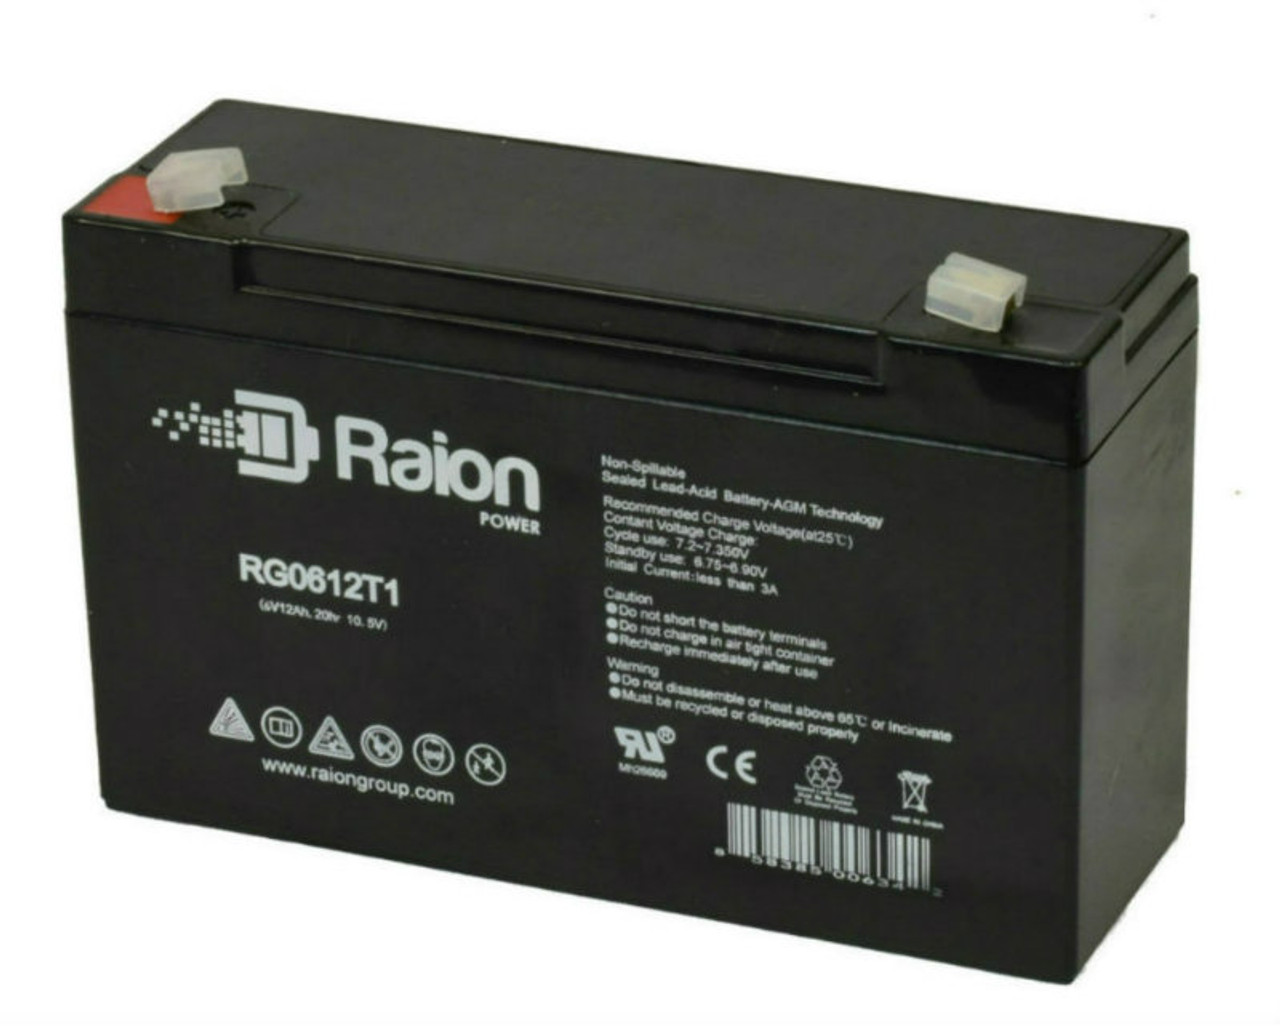 Raion Power RG06120T1 Replacement 6V 12Ah Emergency Light Battery for Teledyne Big Beam B82